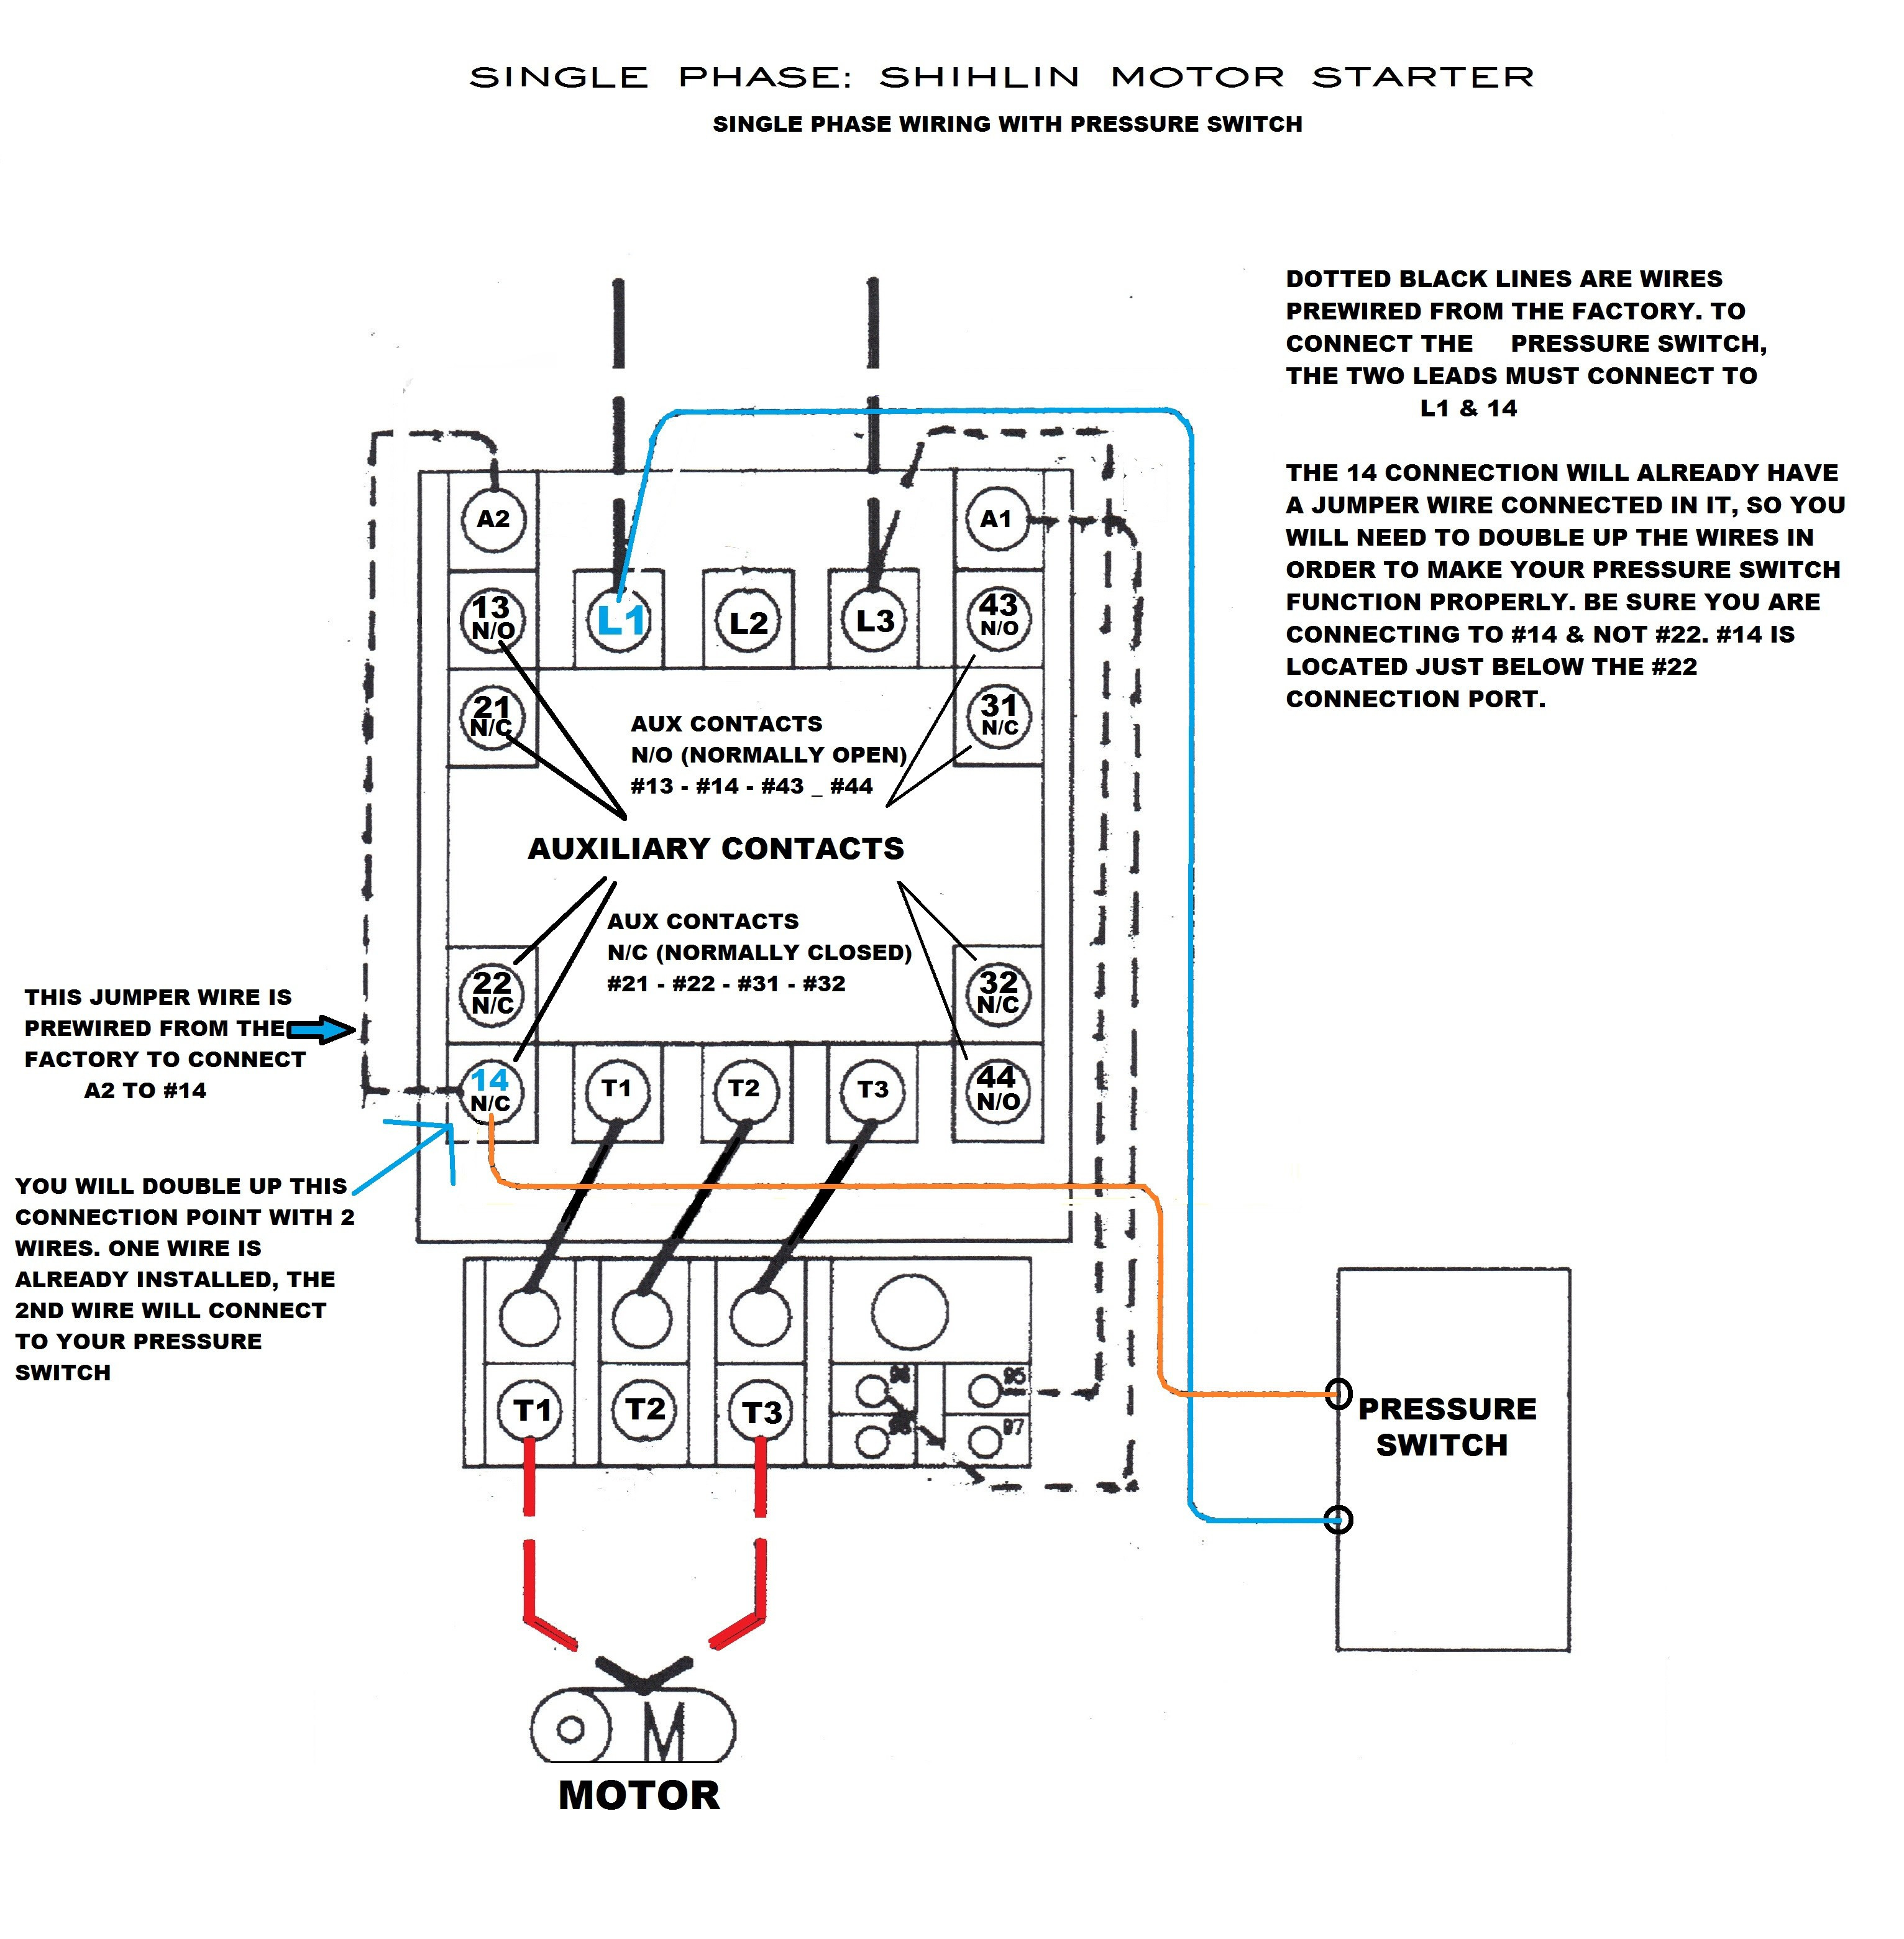 Square D Contactor Wiring Diagram - Wiring Diagram Description - Square D Motor Starters Wiring Diagram